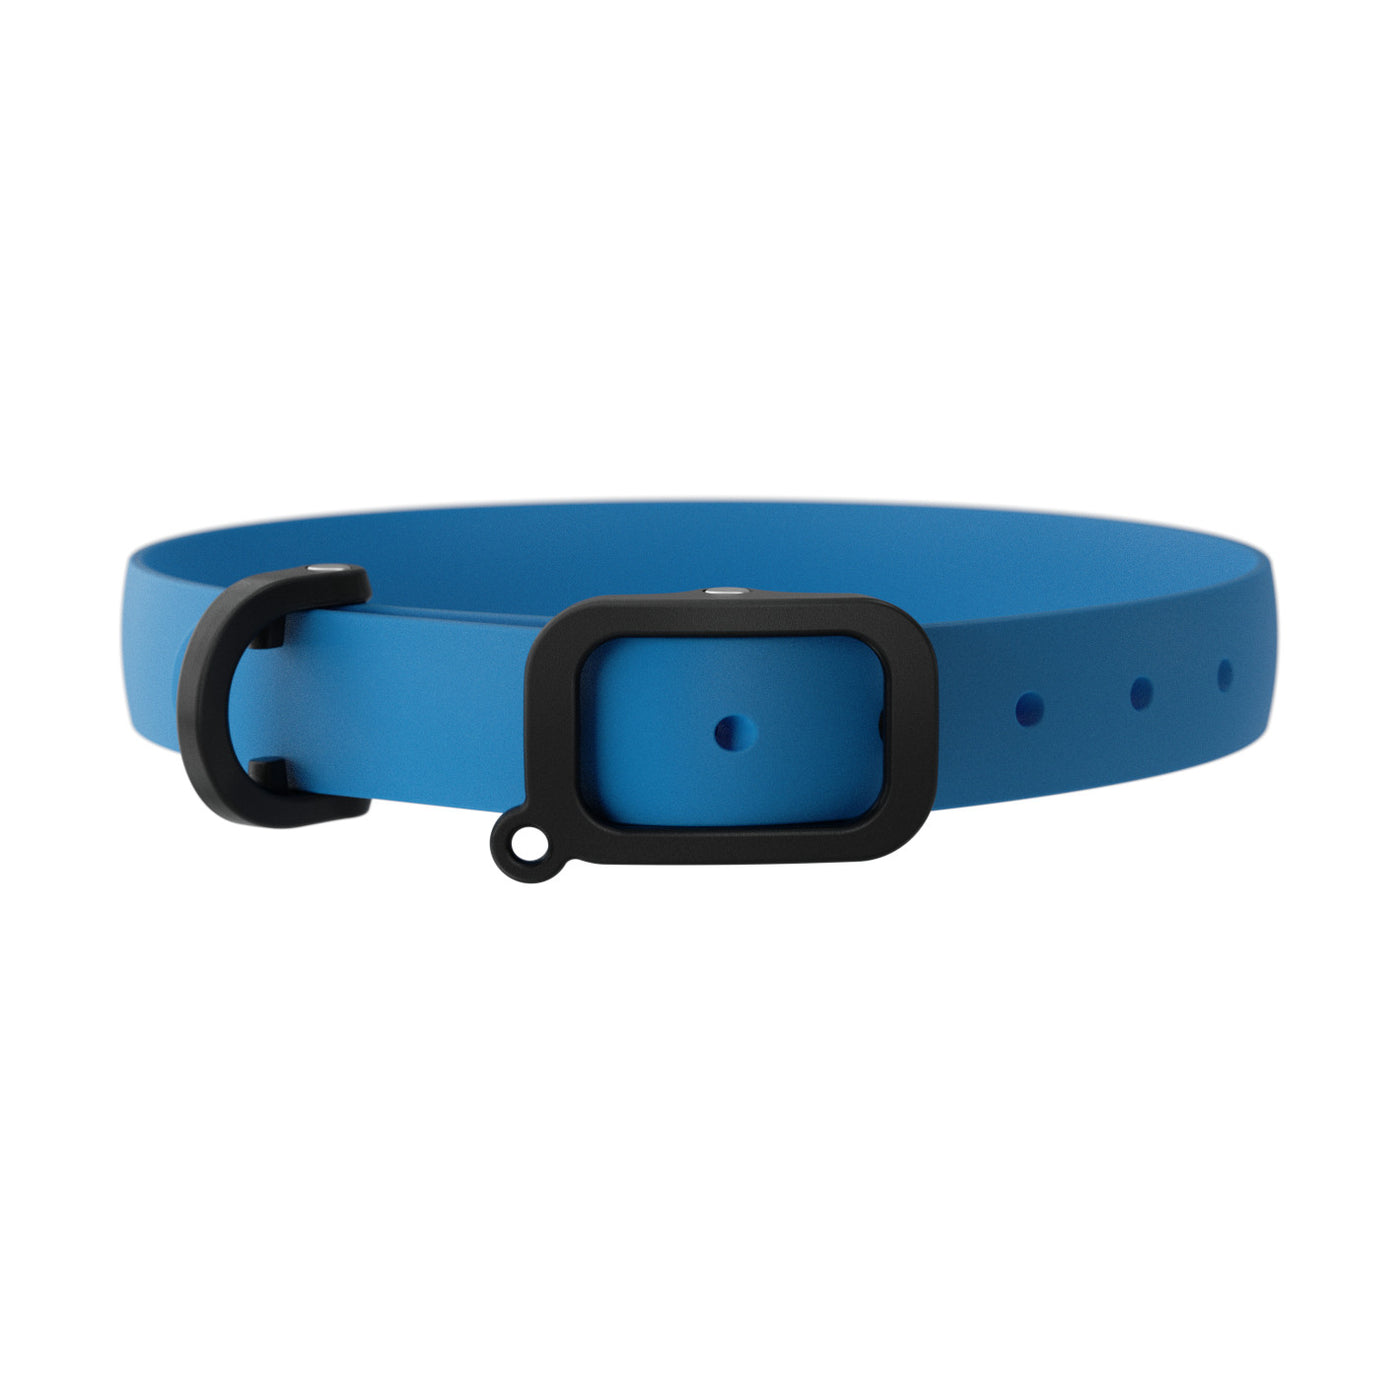 NUVUQ - Waterproof and Lightweight Dog Collar - Blueberry Blue